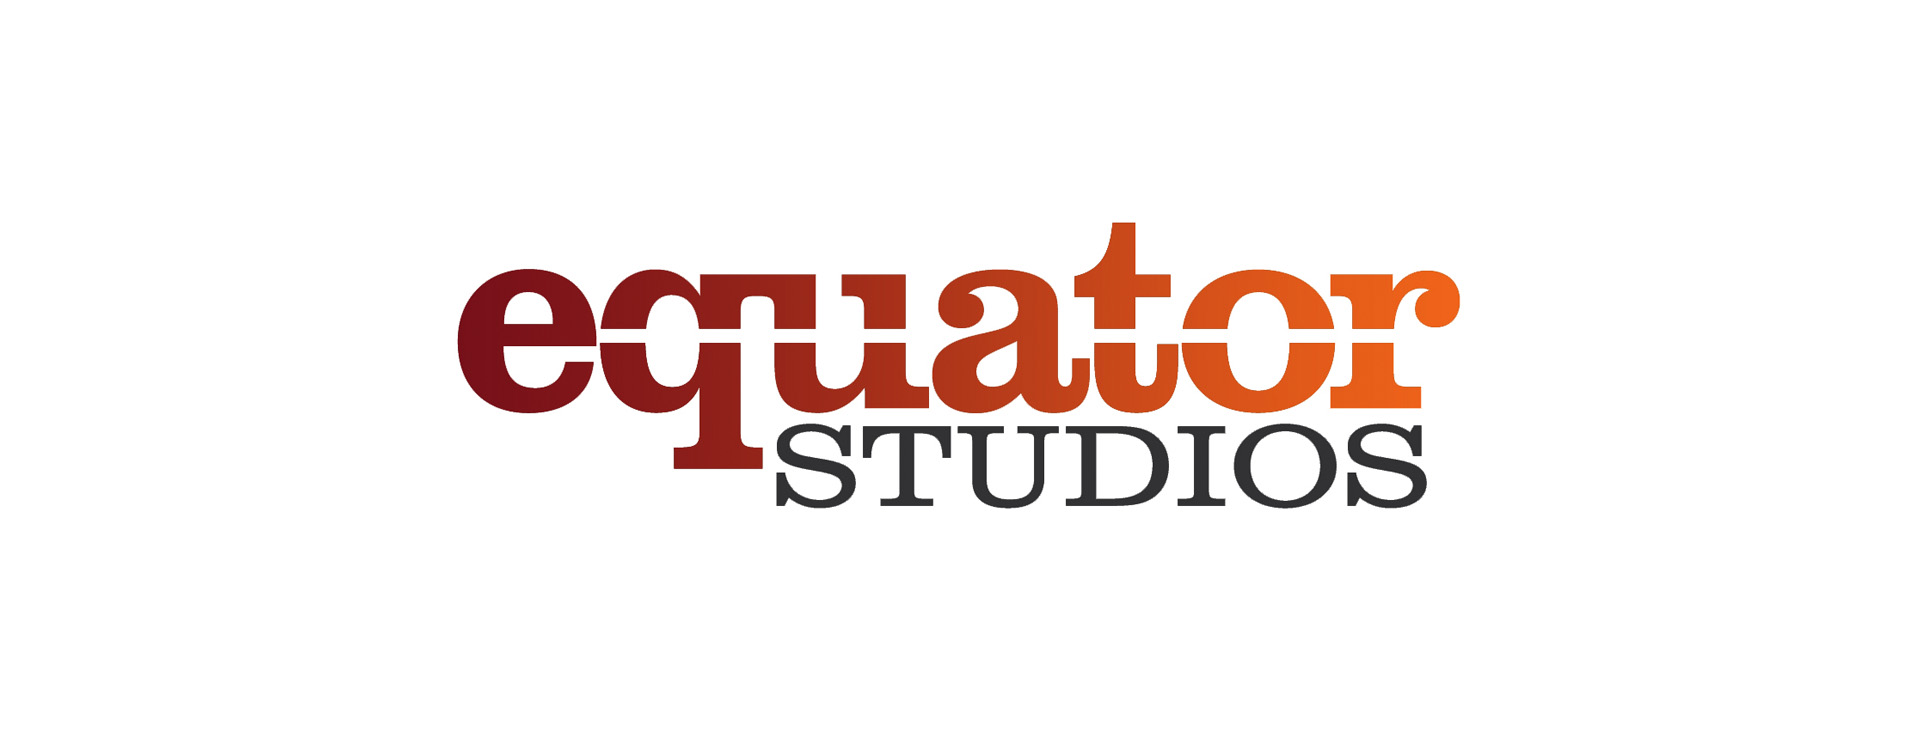 Equator Studios